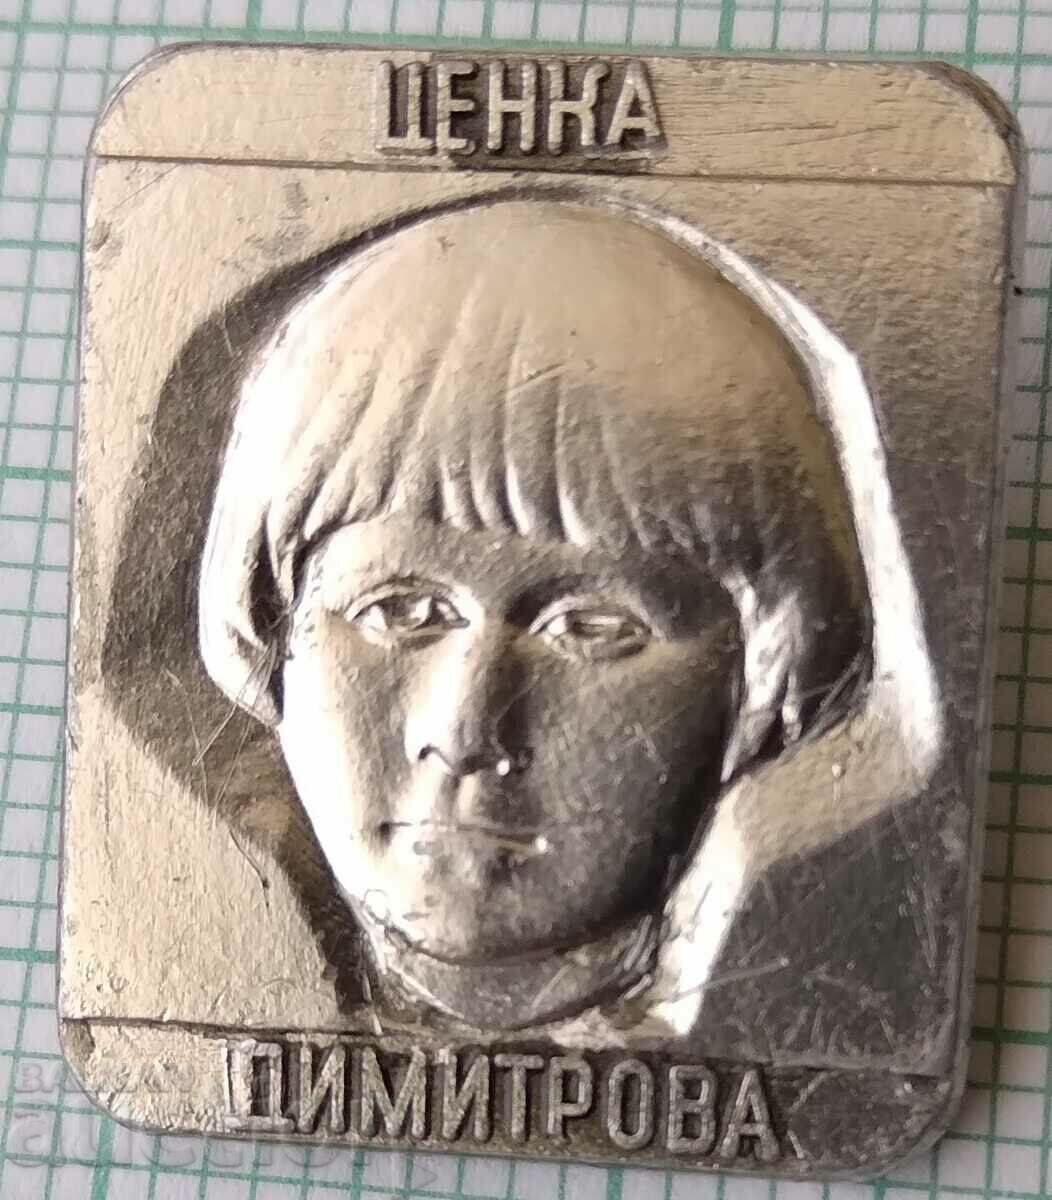 16086 Badge - Tsenka Dimitrova - child hero - Yastrebino